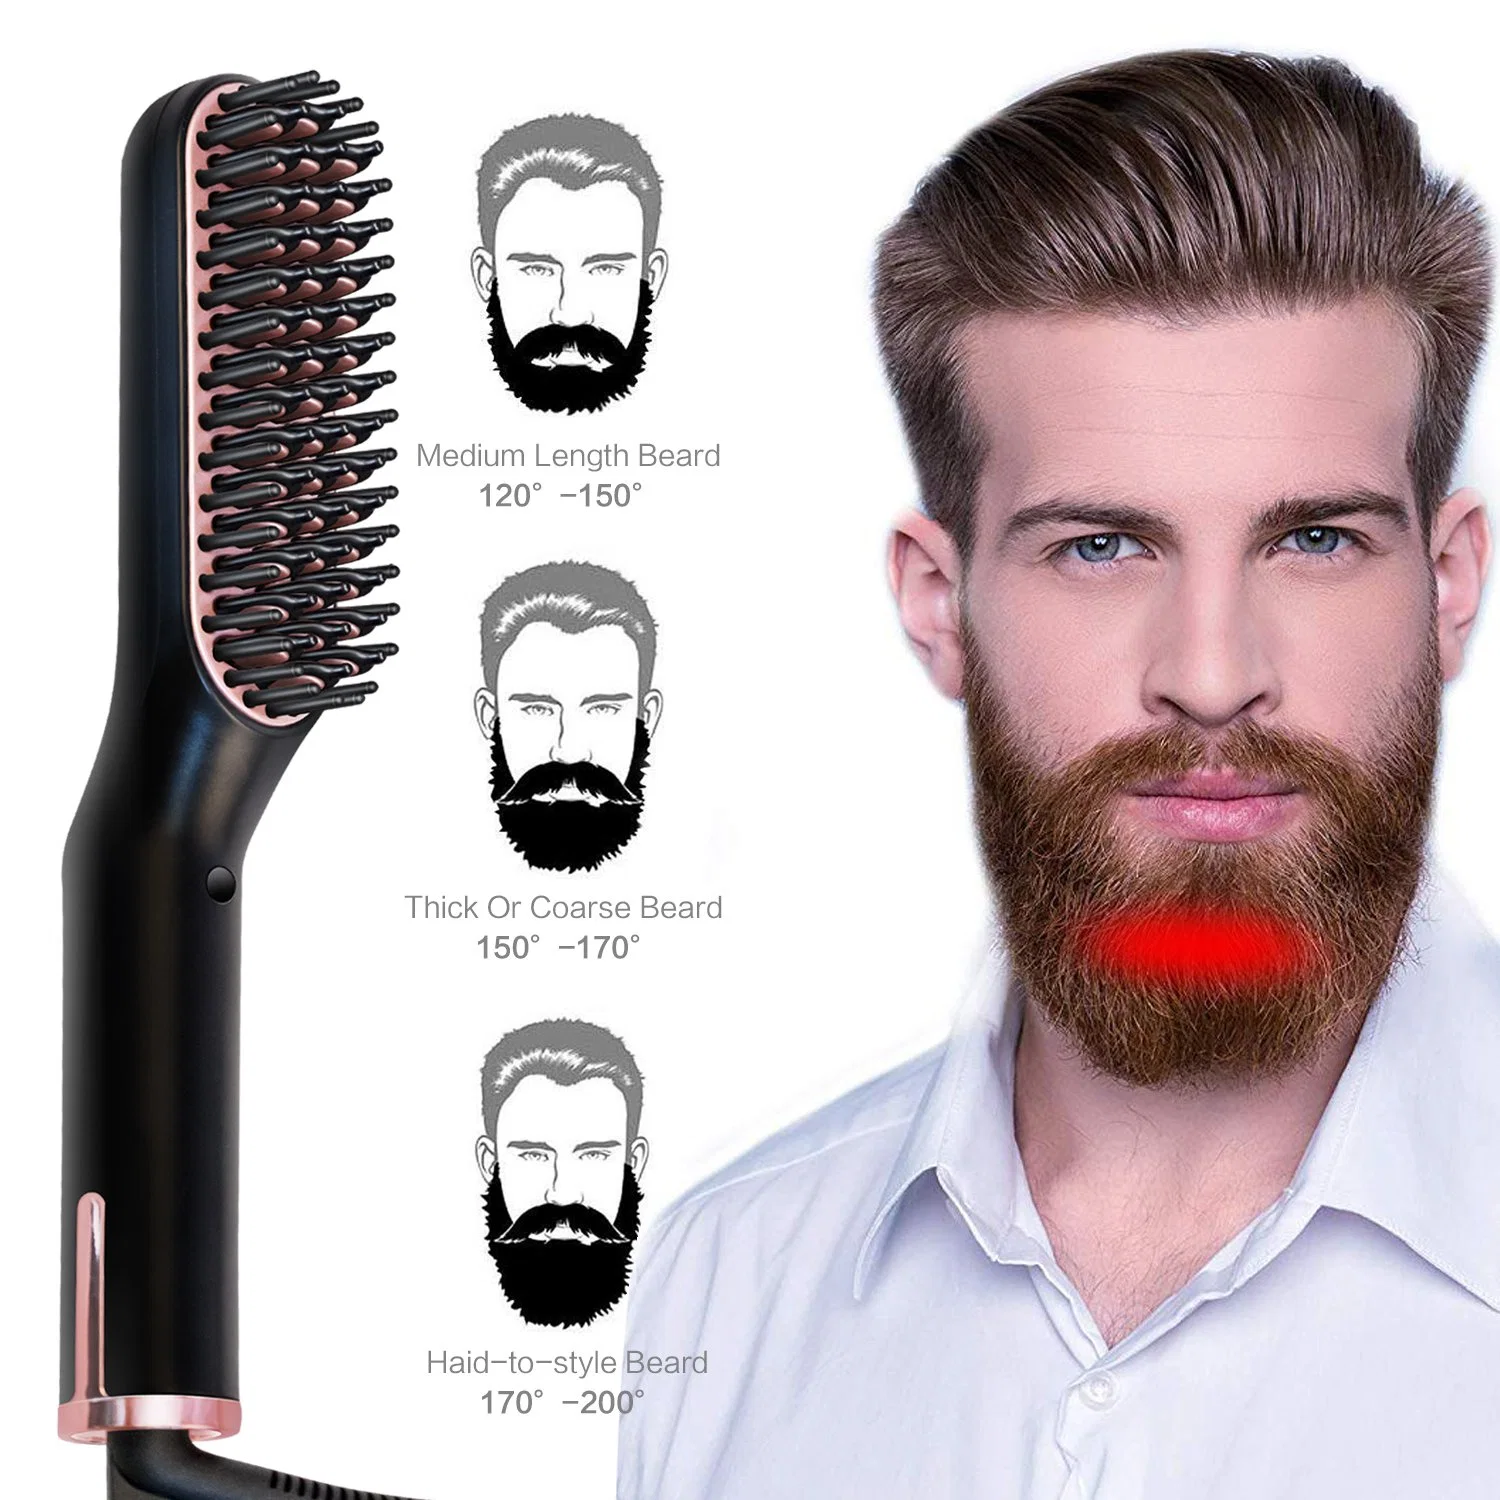 2021 barato por grosso de Barba escova alisadora elétrica inteligente para homens